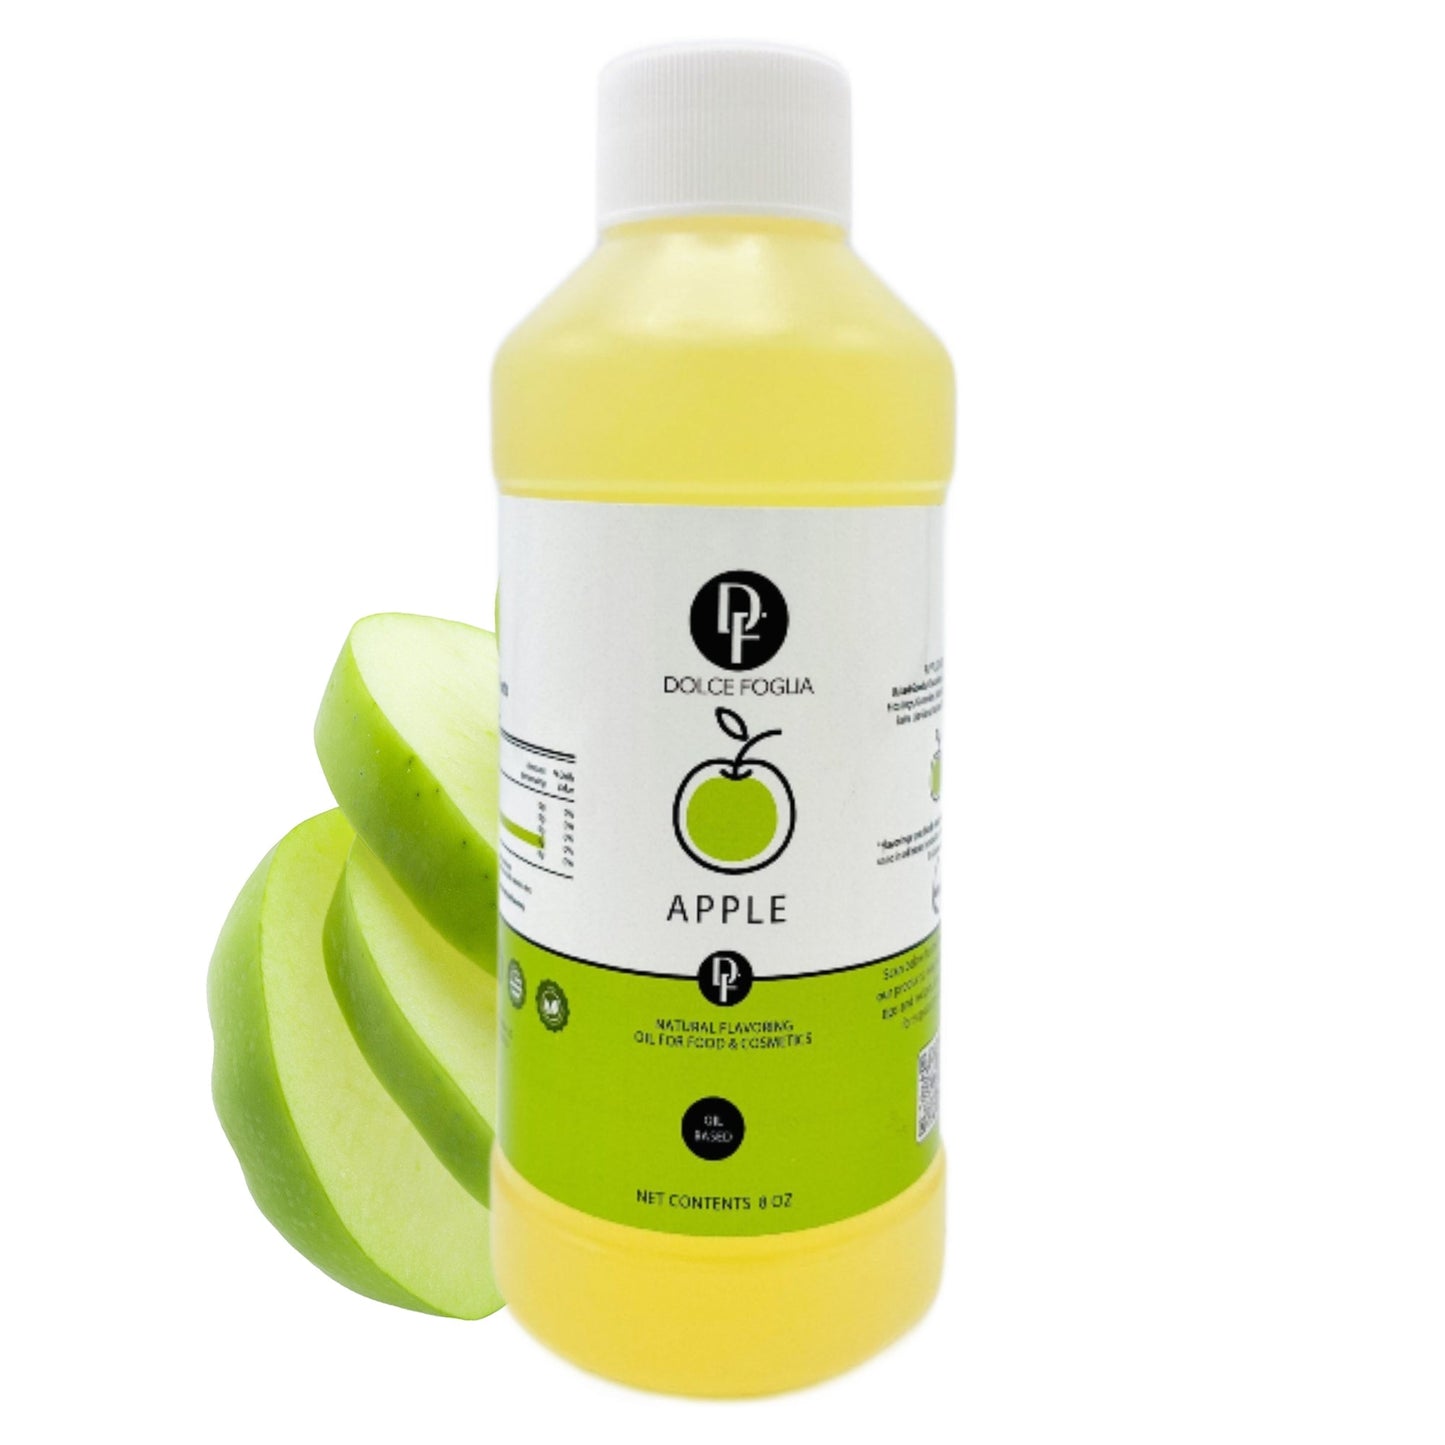 Oil Soluble Pineapple Flavoring | Premium Quality | Dolce Foglia 2 oz